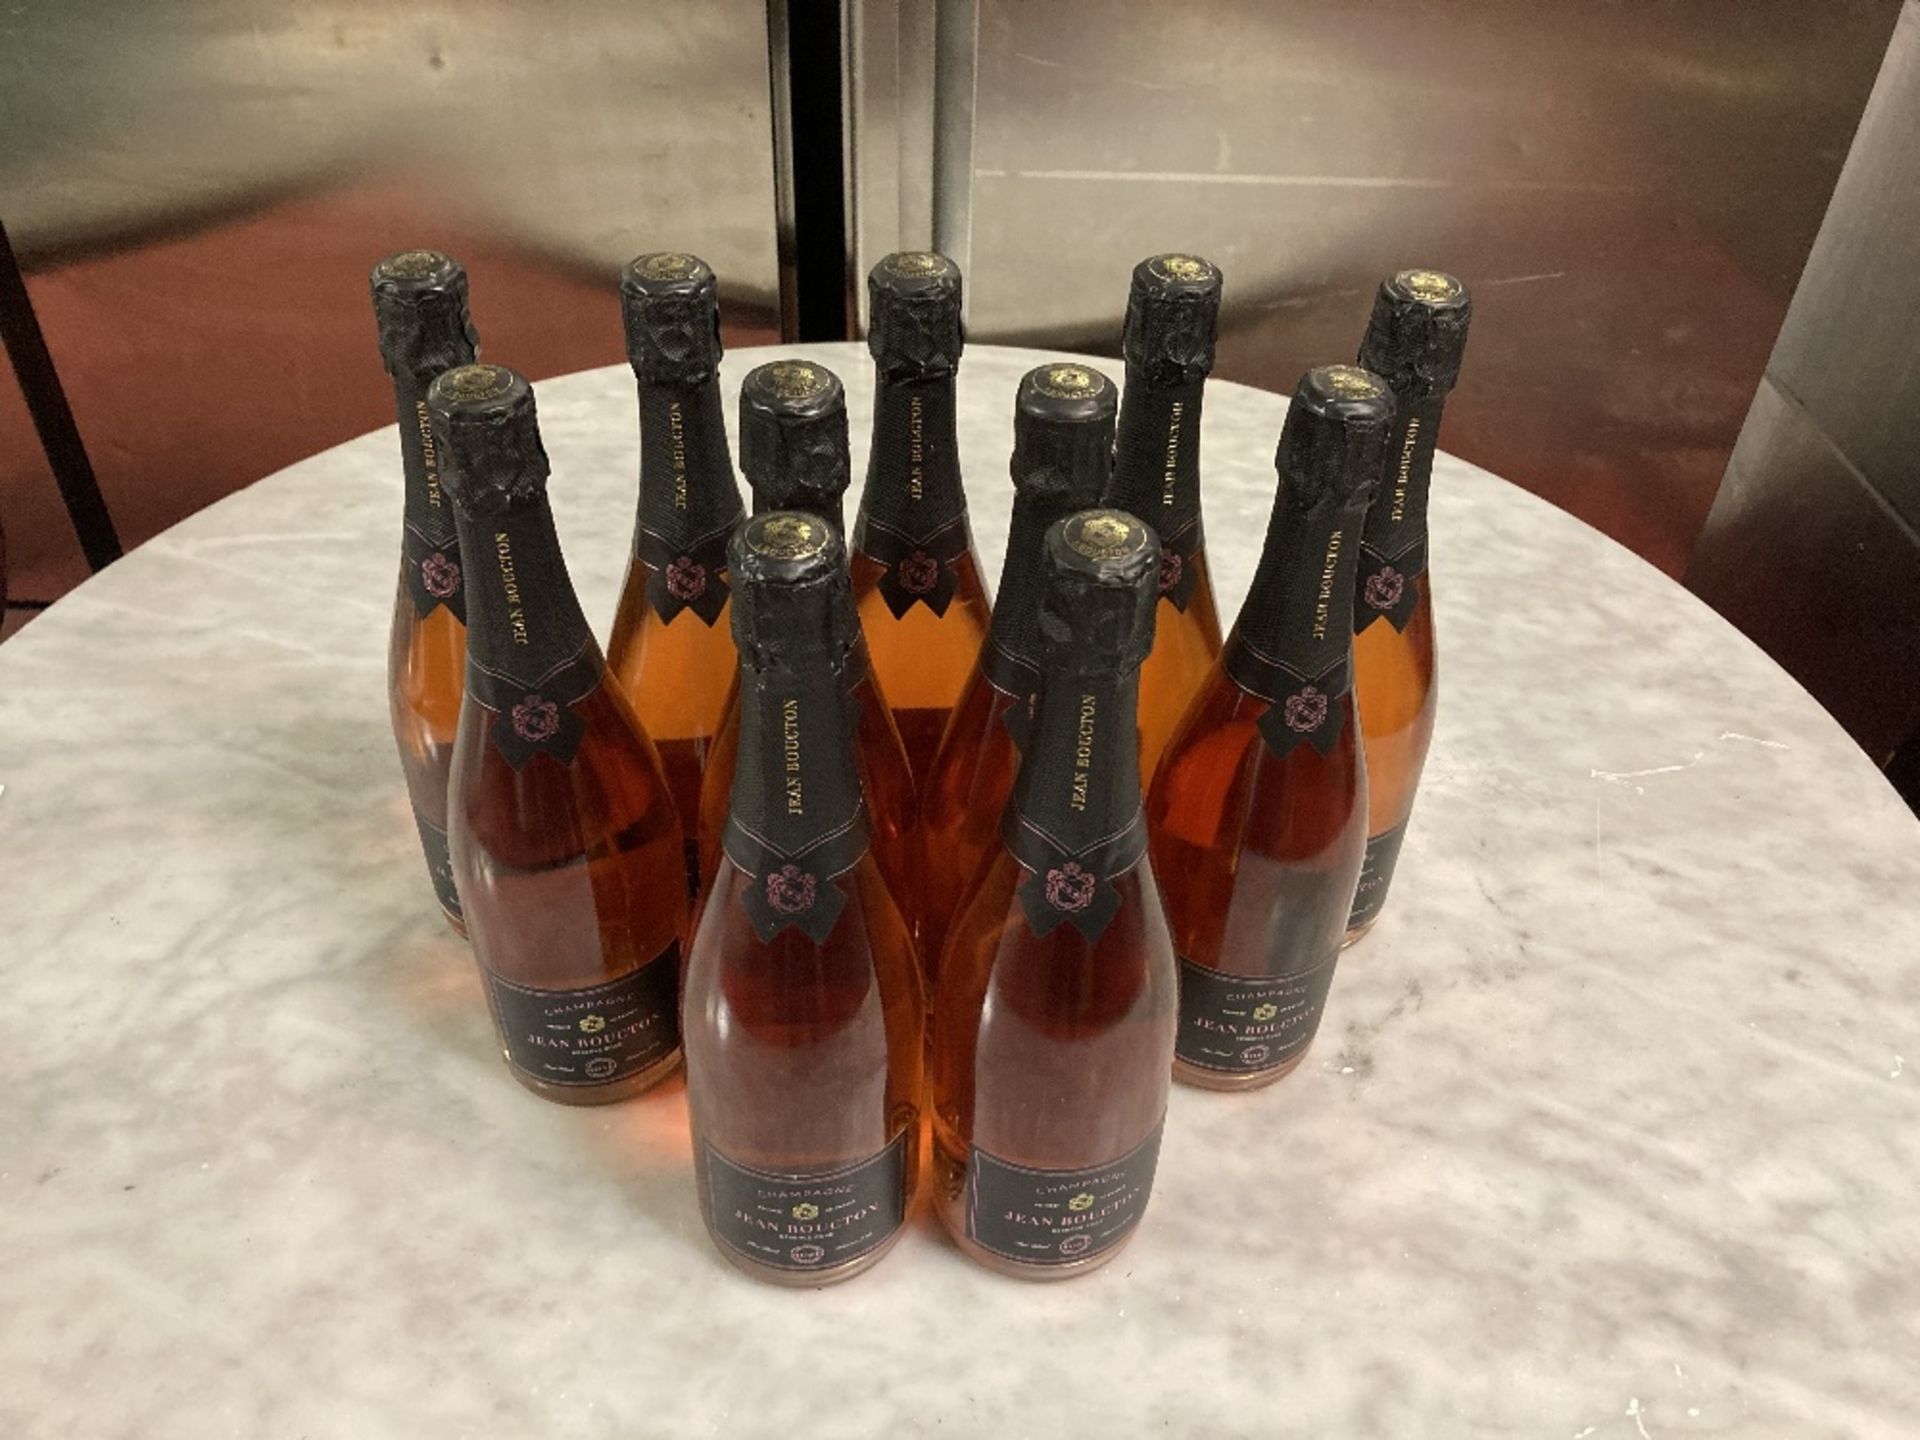 (11) Bottles of Jean Boucton Reserve Rose Champagne